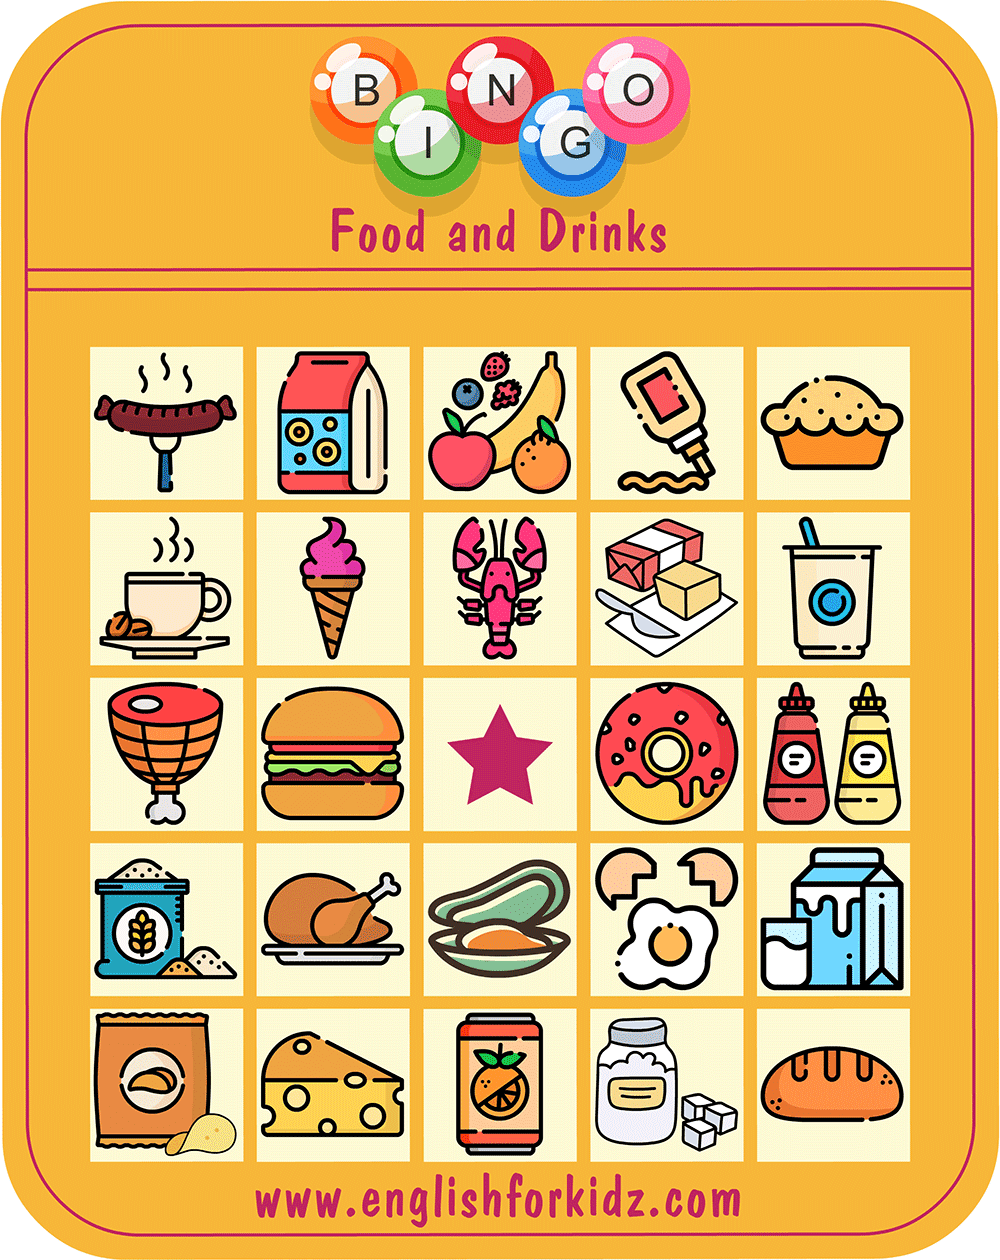 english-for-kids-step-by-step-food-drinks-bingo-game